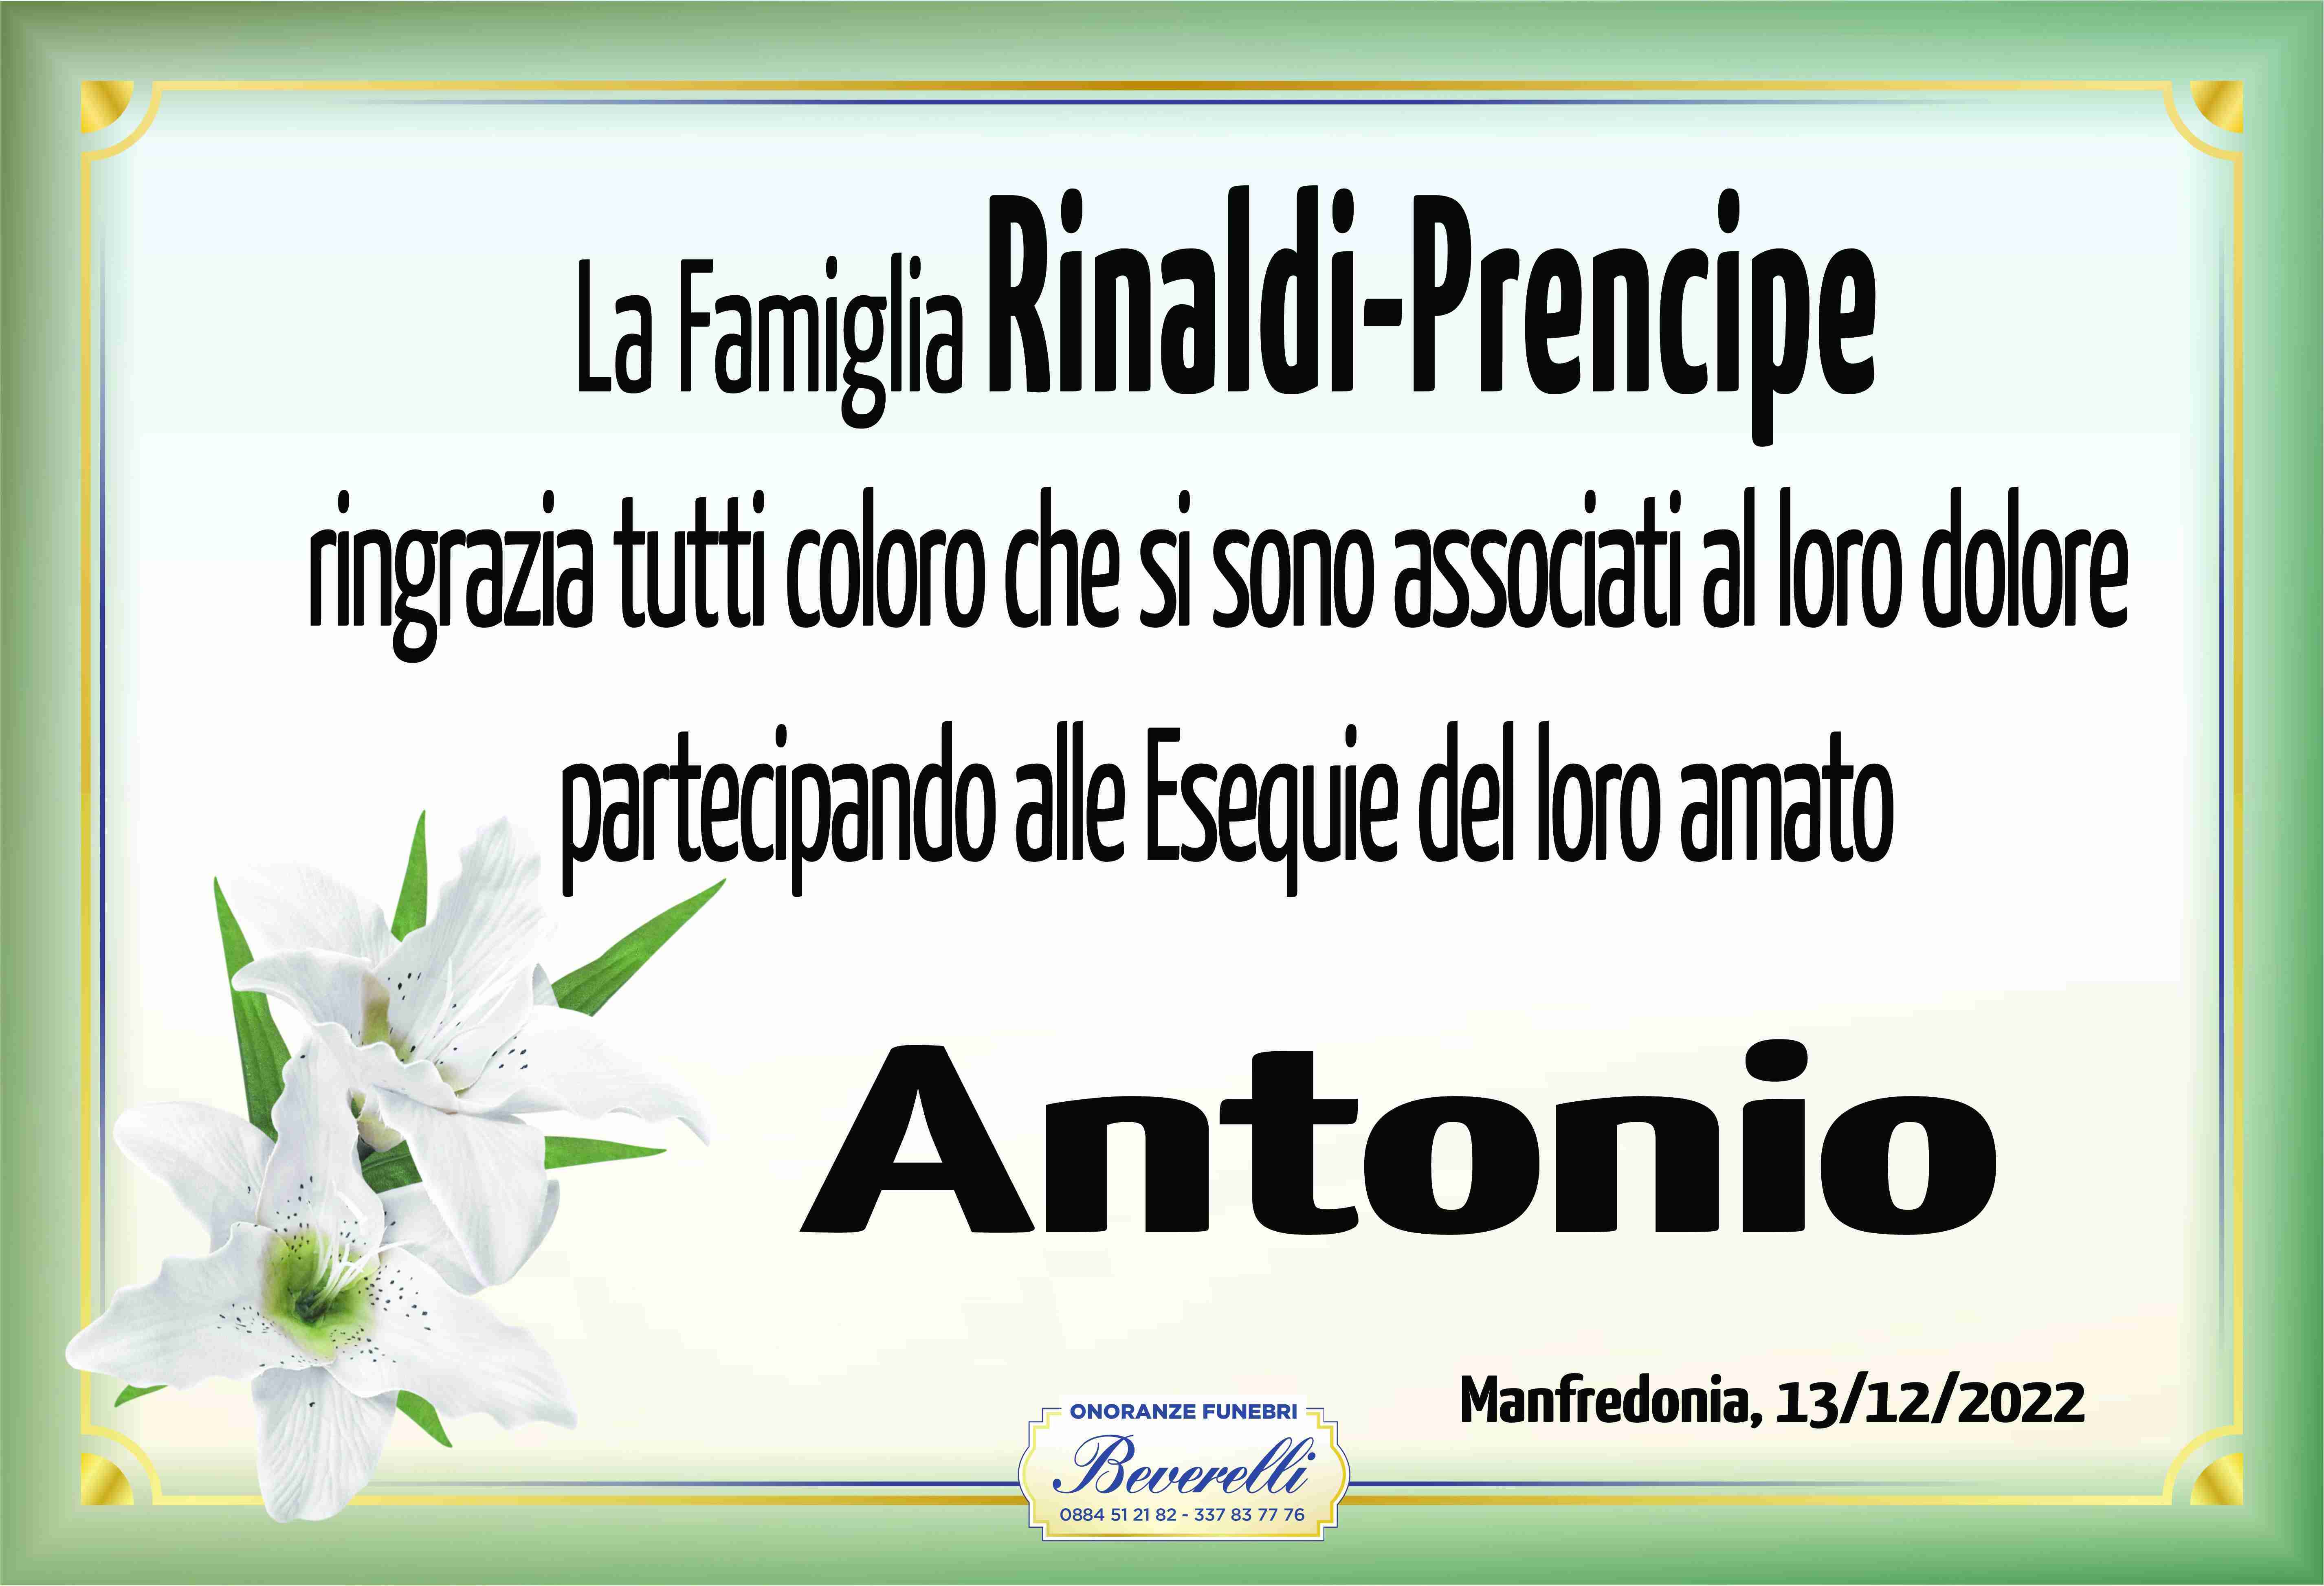 Antonio Rinaldi